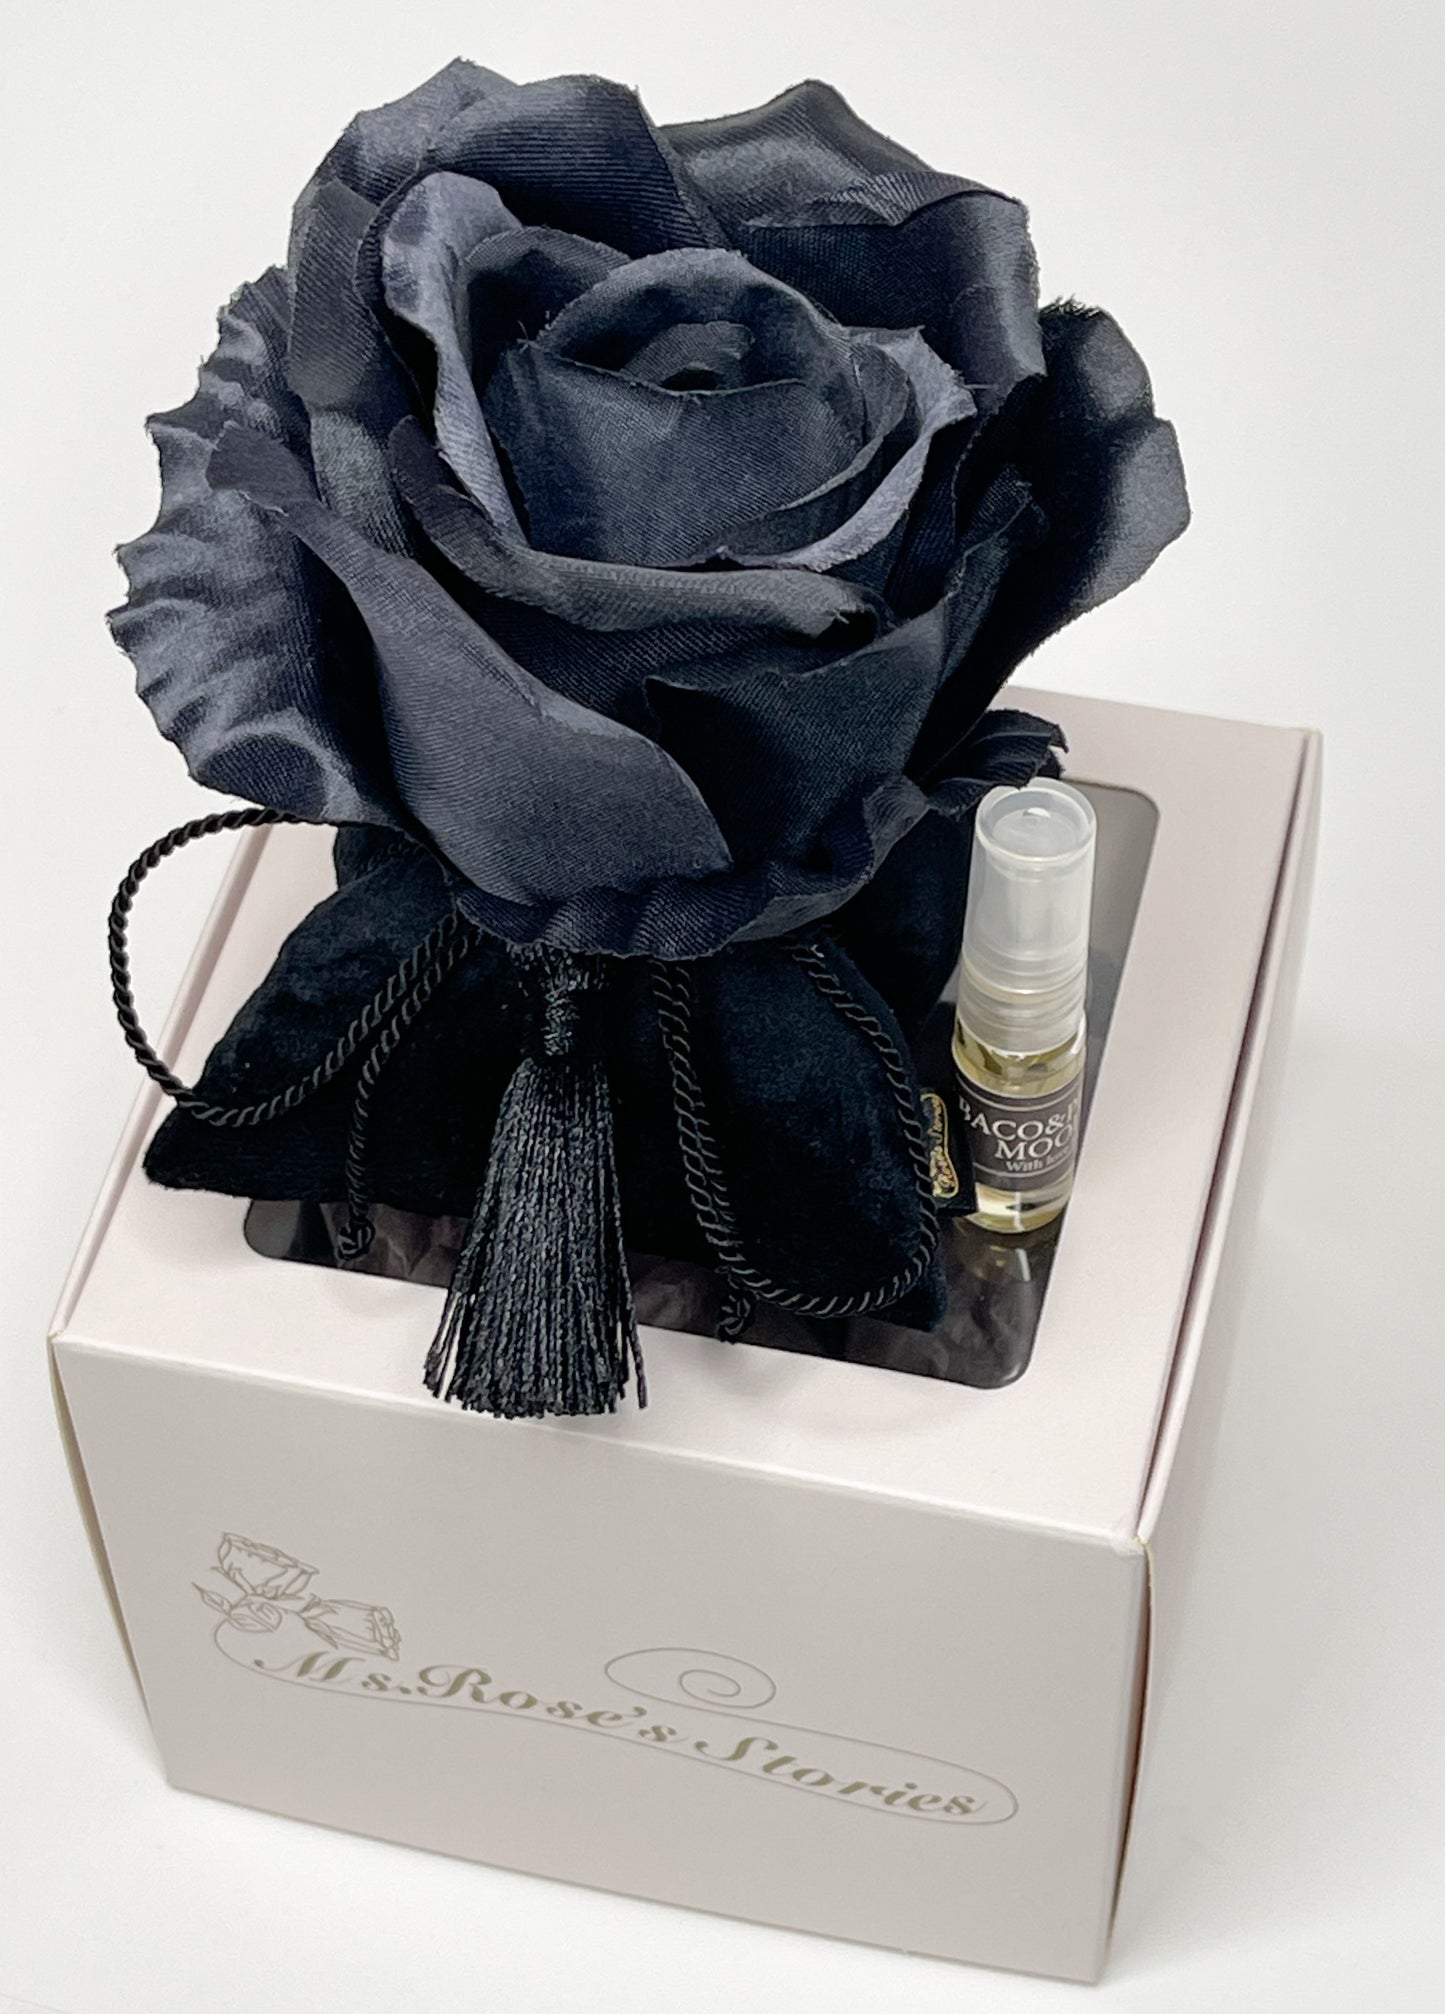 Home fragrance "Black rose"